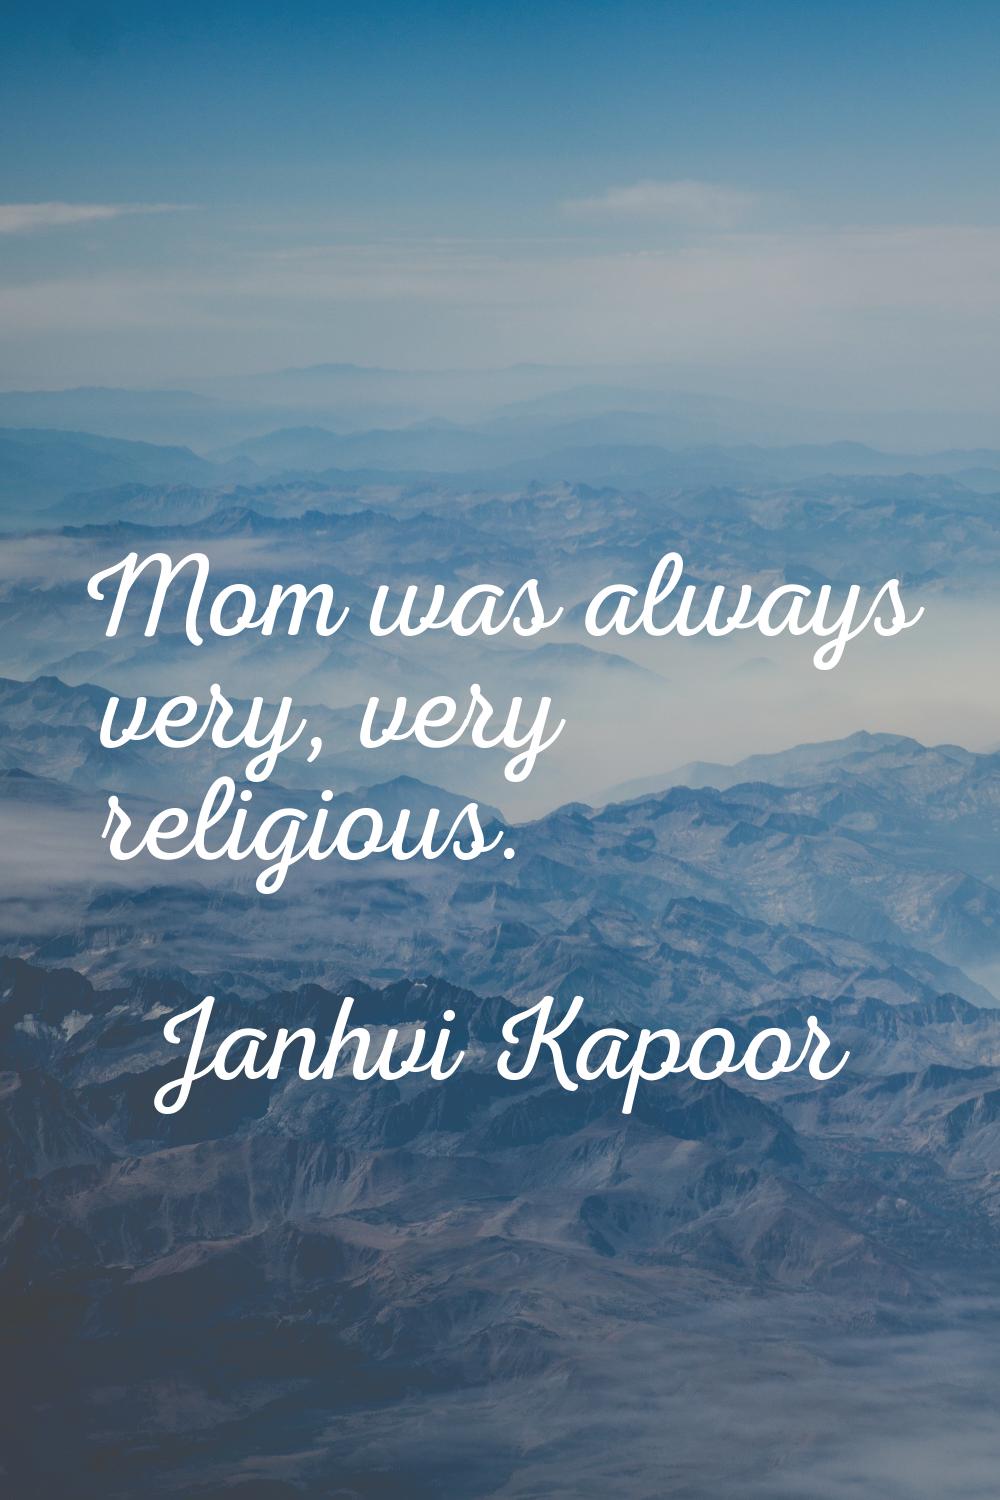 Mom was always very, very religious.